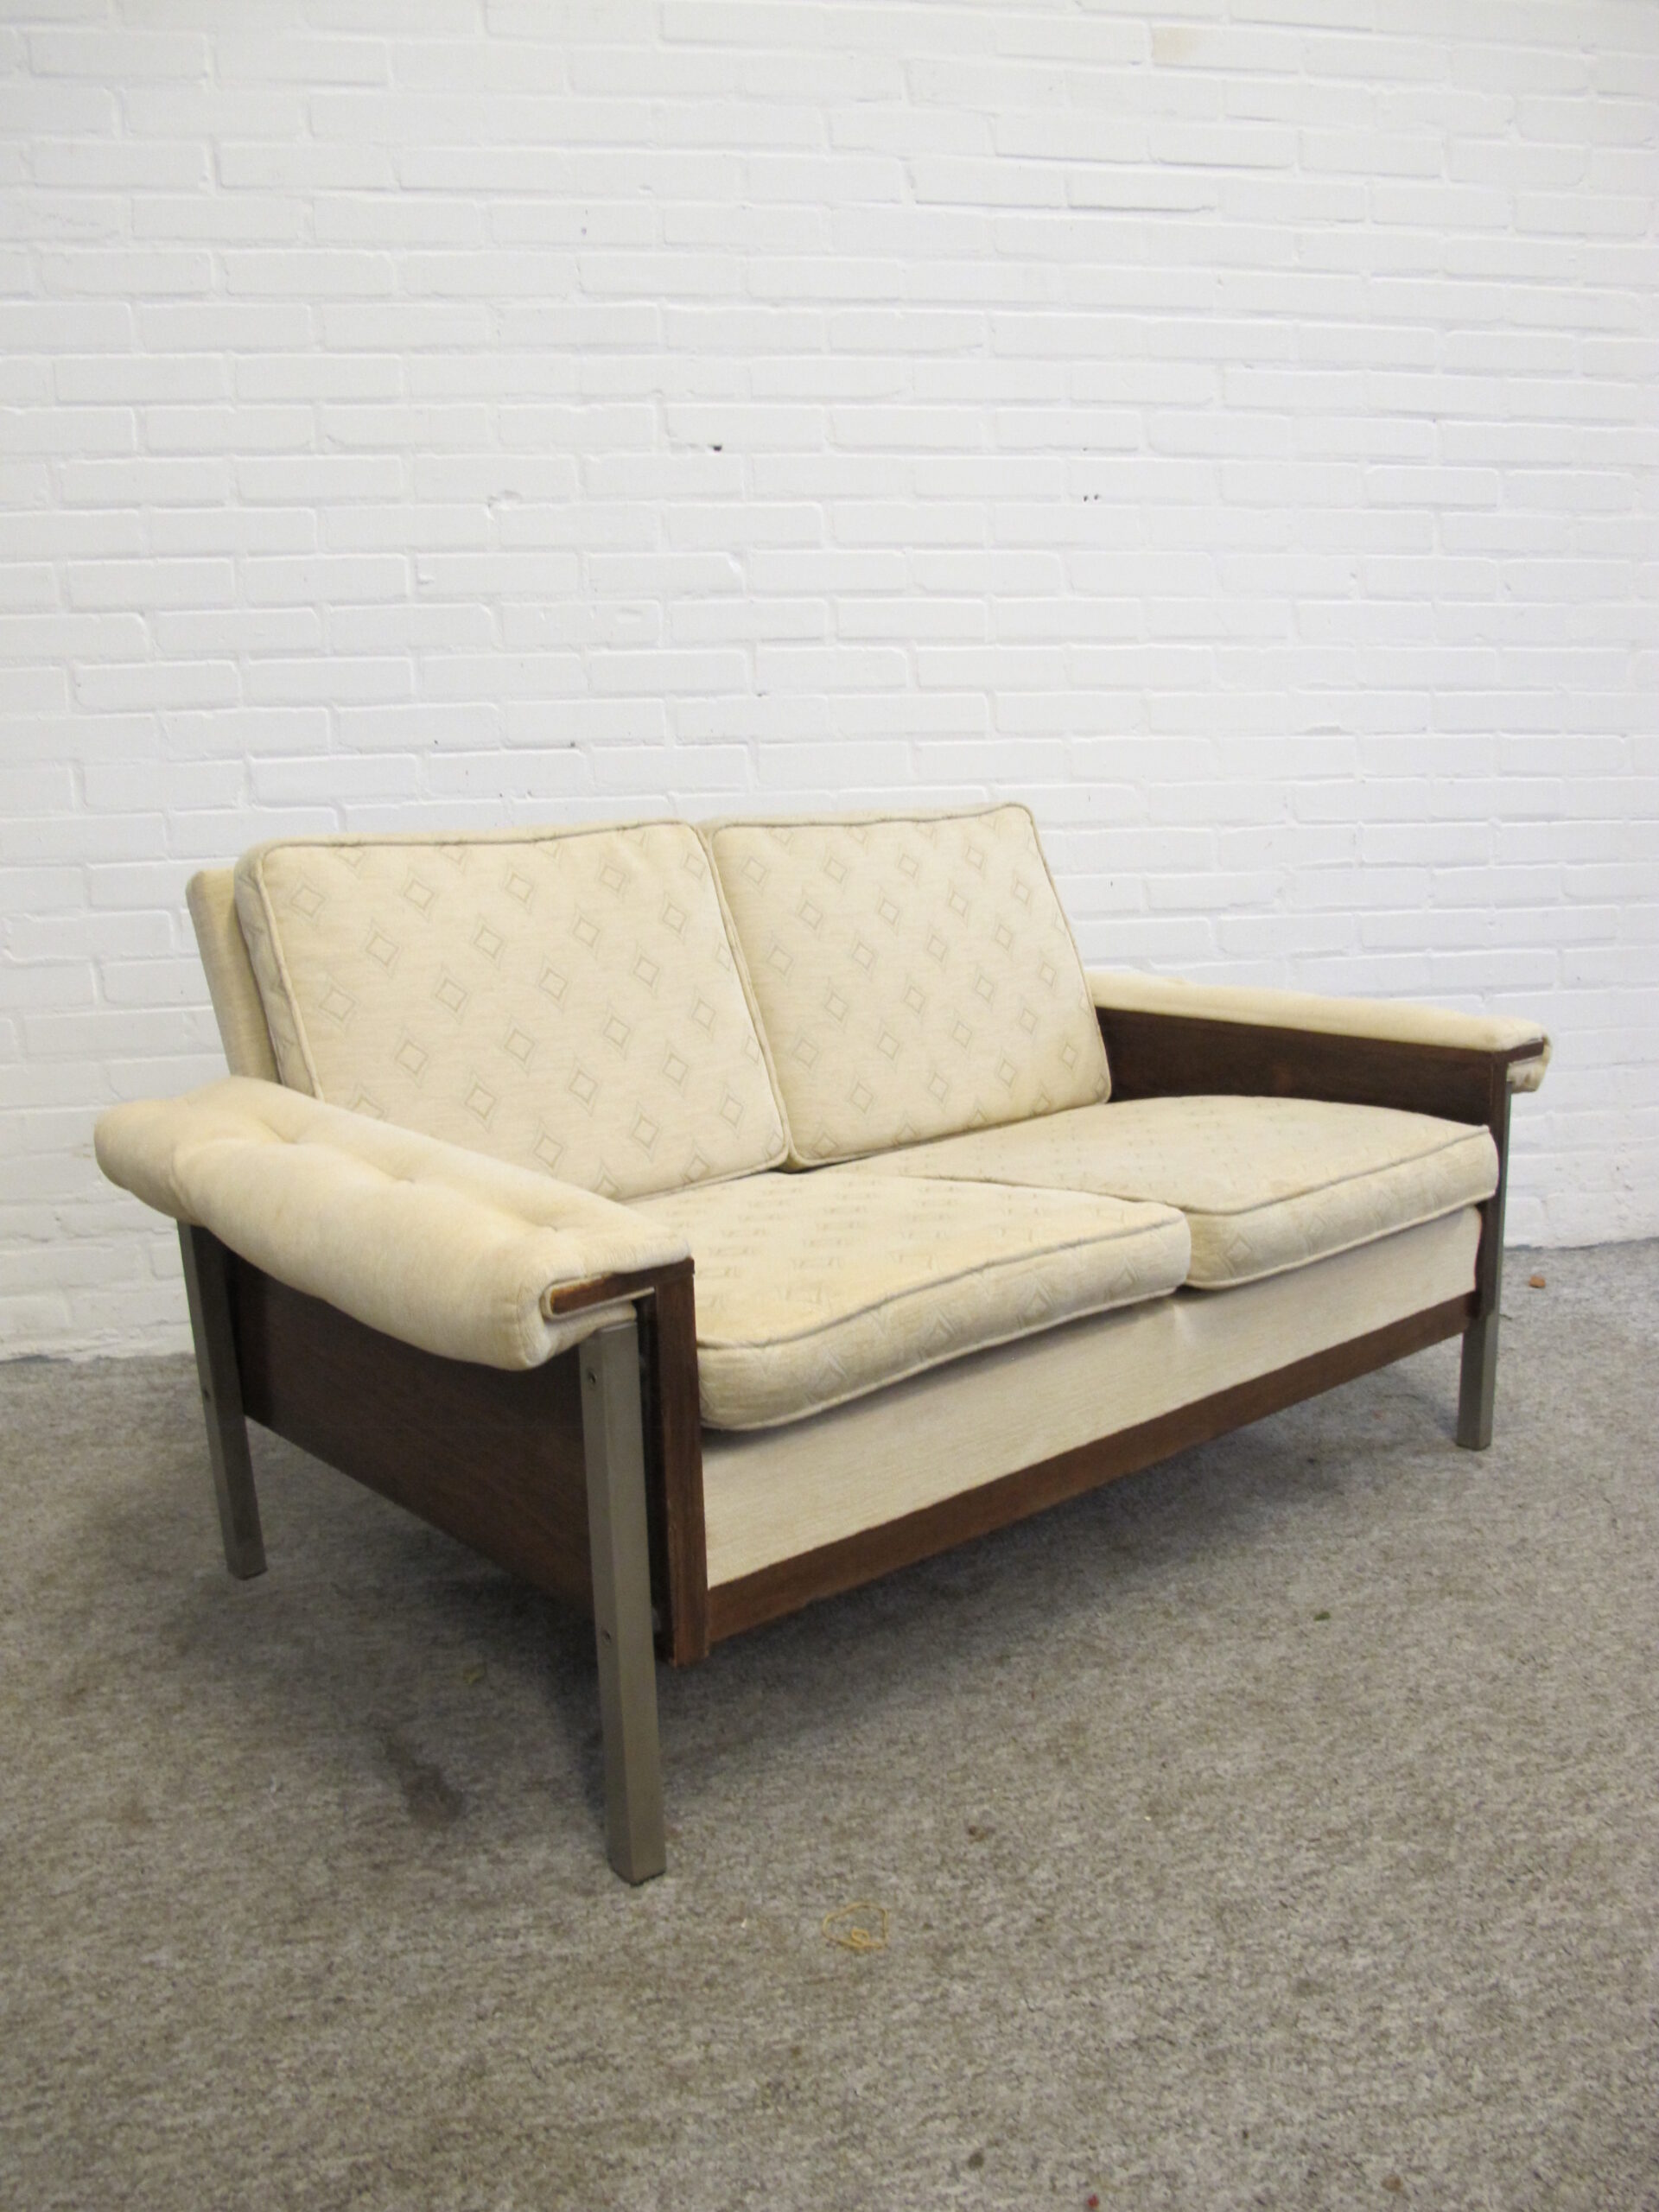 Bank palissanderhout rosewood Pastoe Spectrum sofa bench midcentury vintage